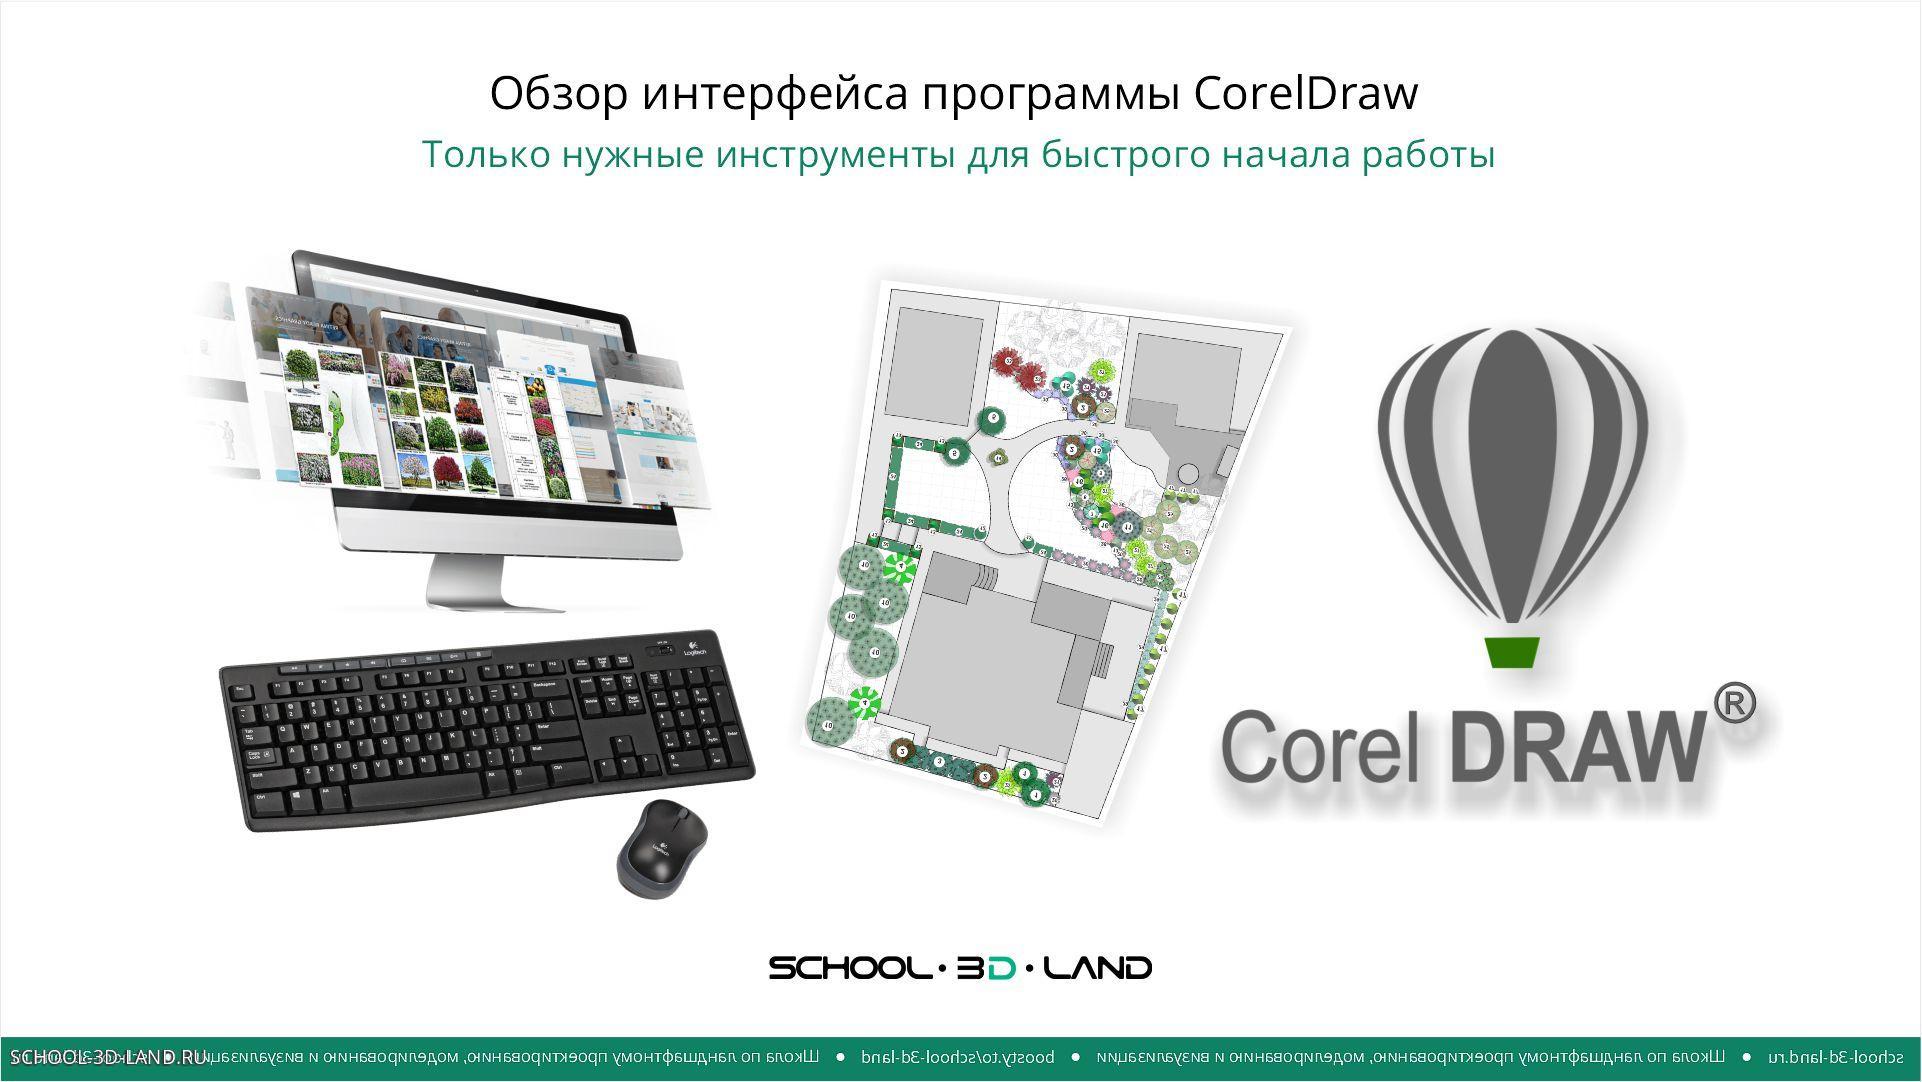 CorelDRAW interface